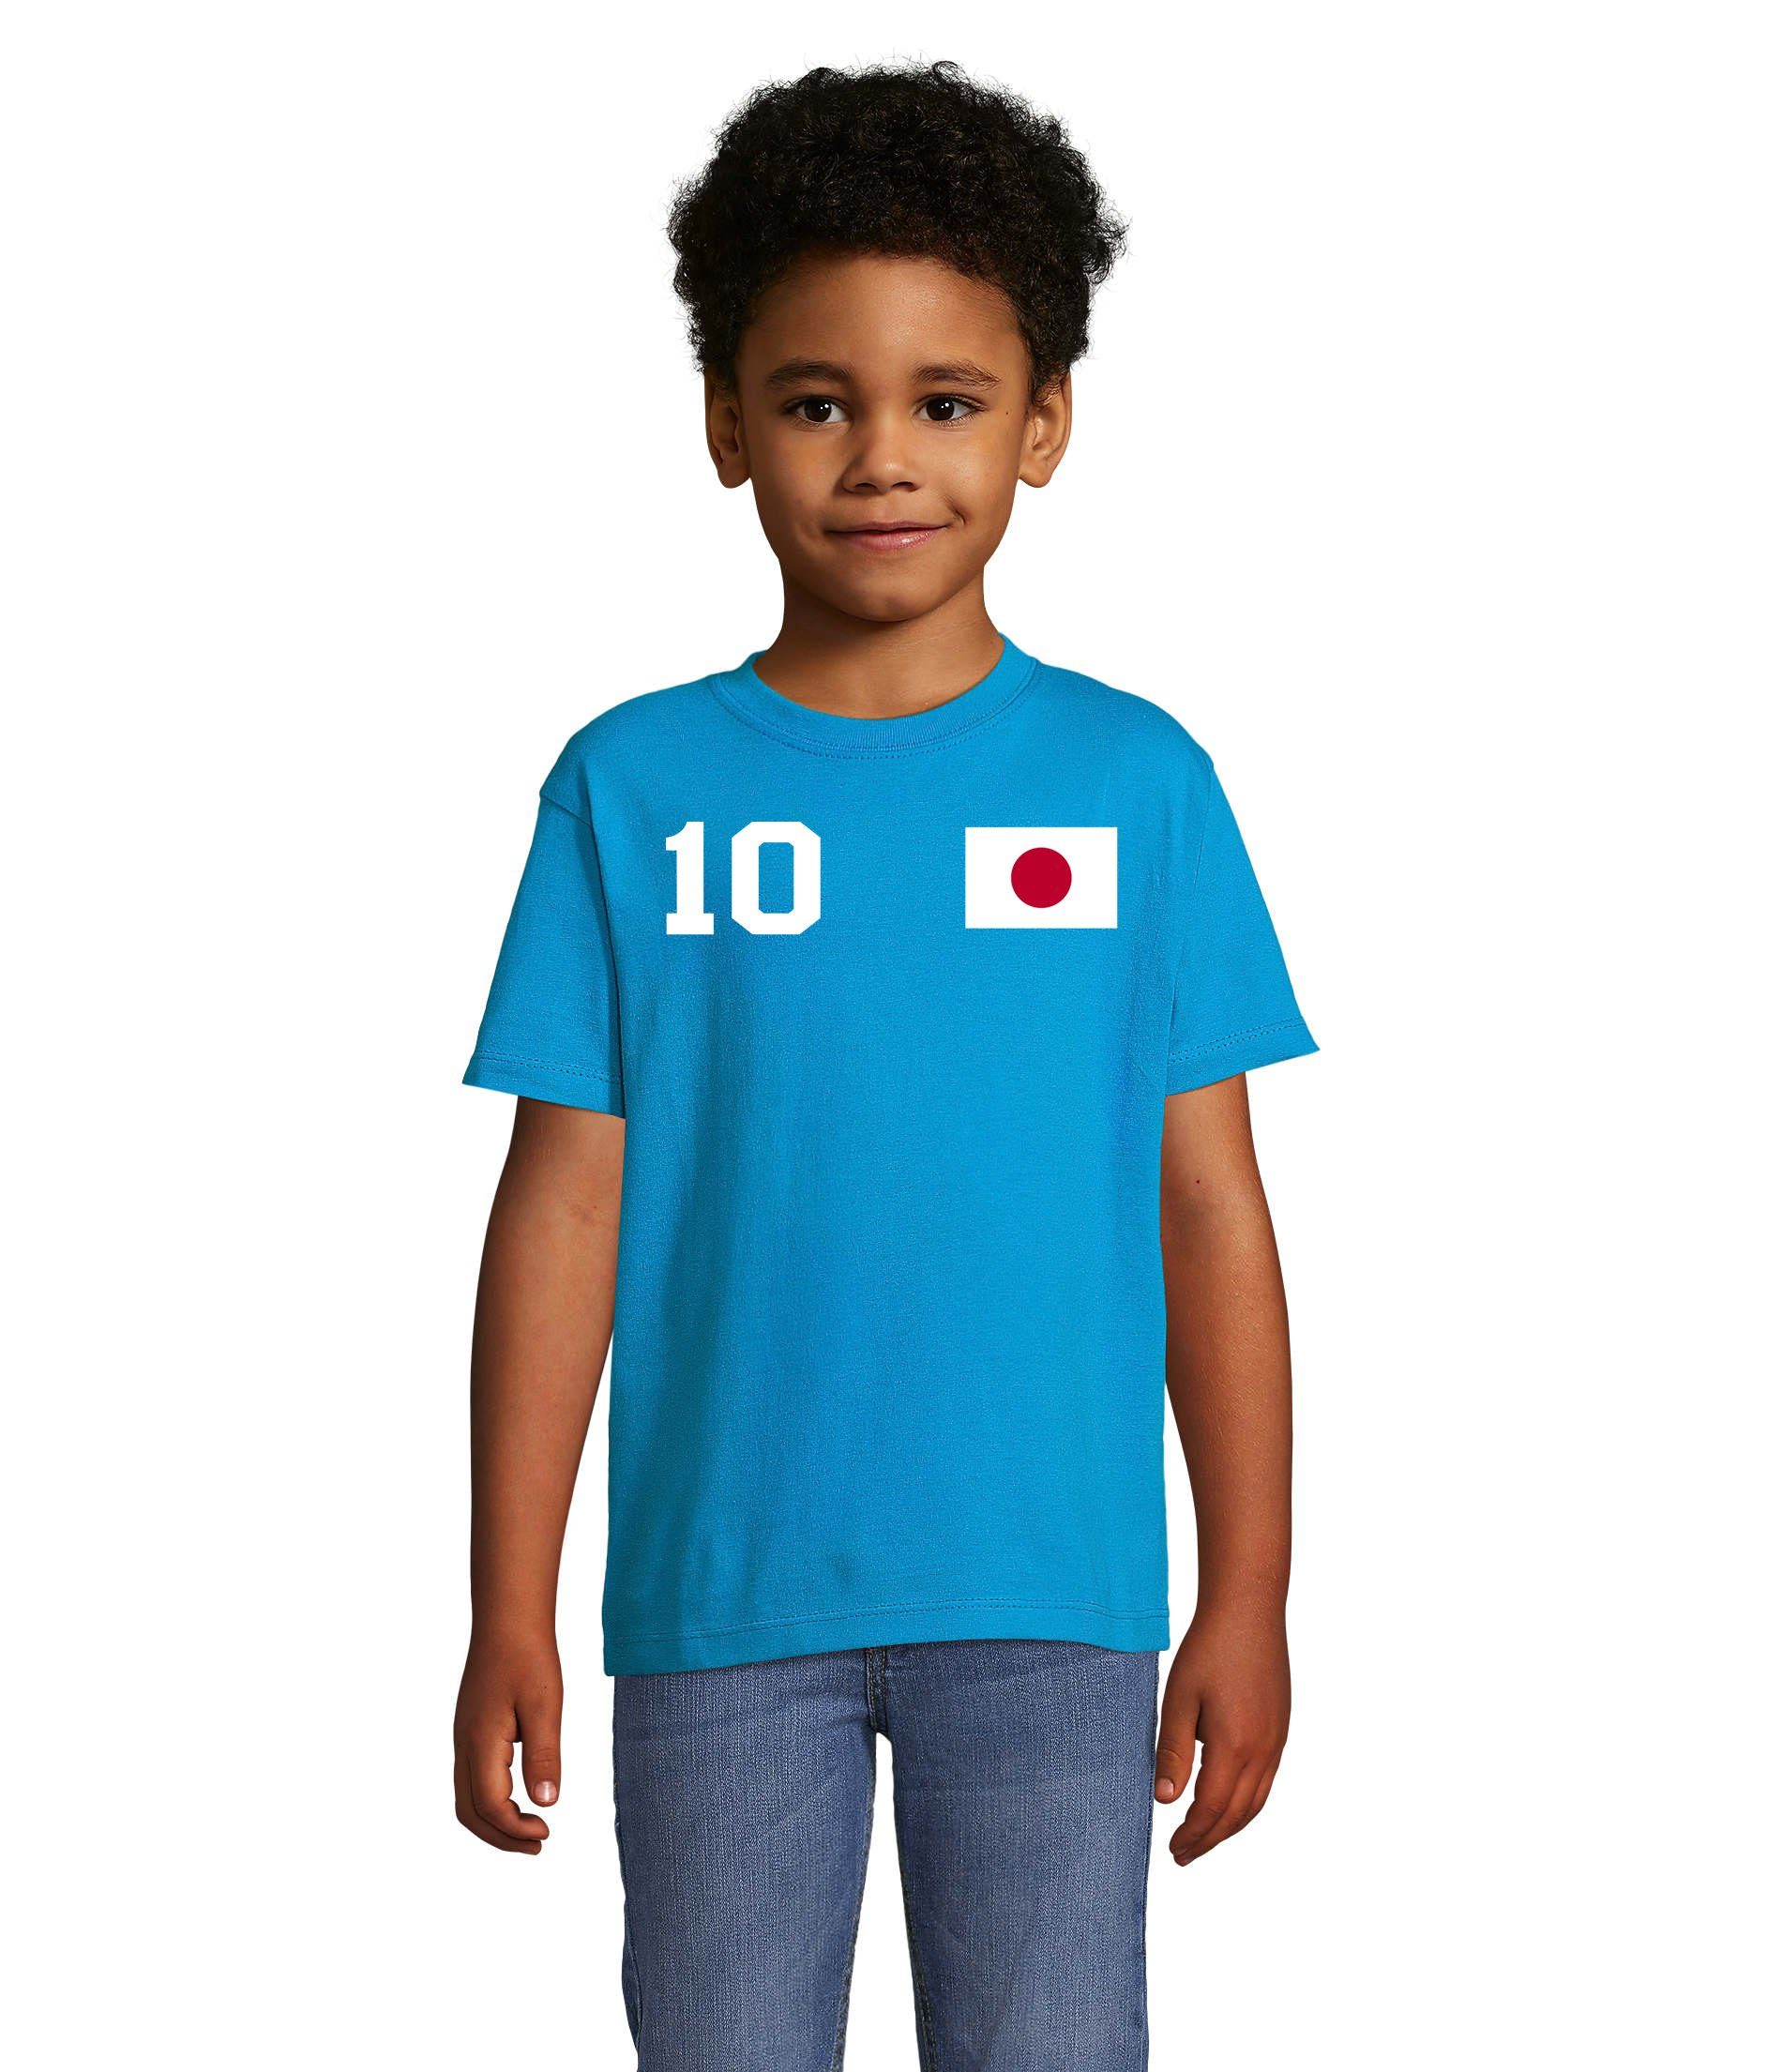 Blondie & Handball Japan Kinder Trikot T-Shirt Sport WM Weiss/Blau Meister Brownie Fußball Asien